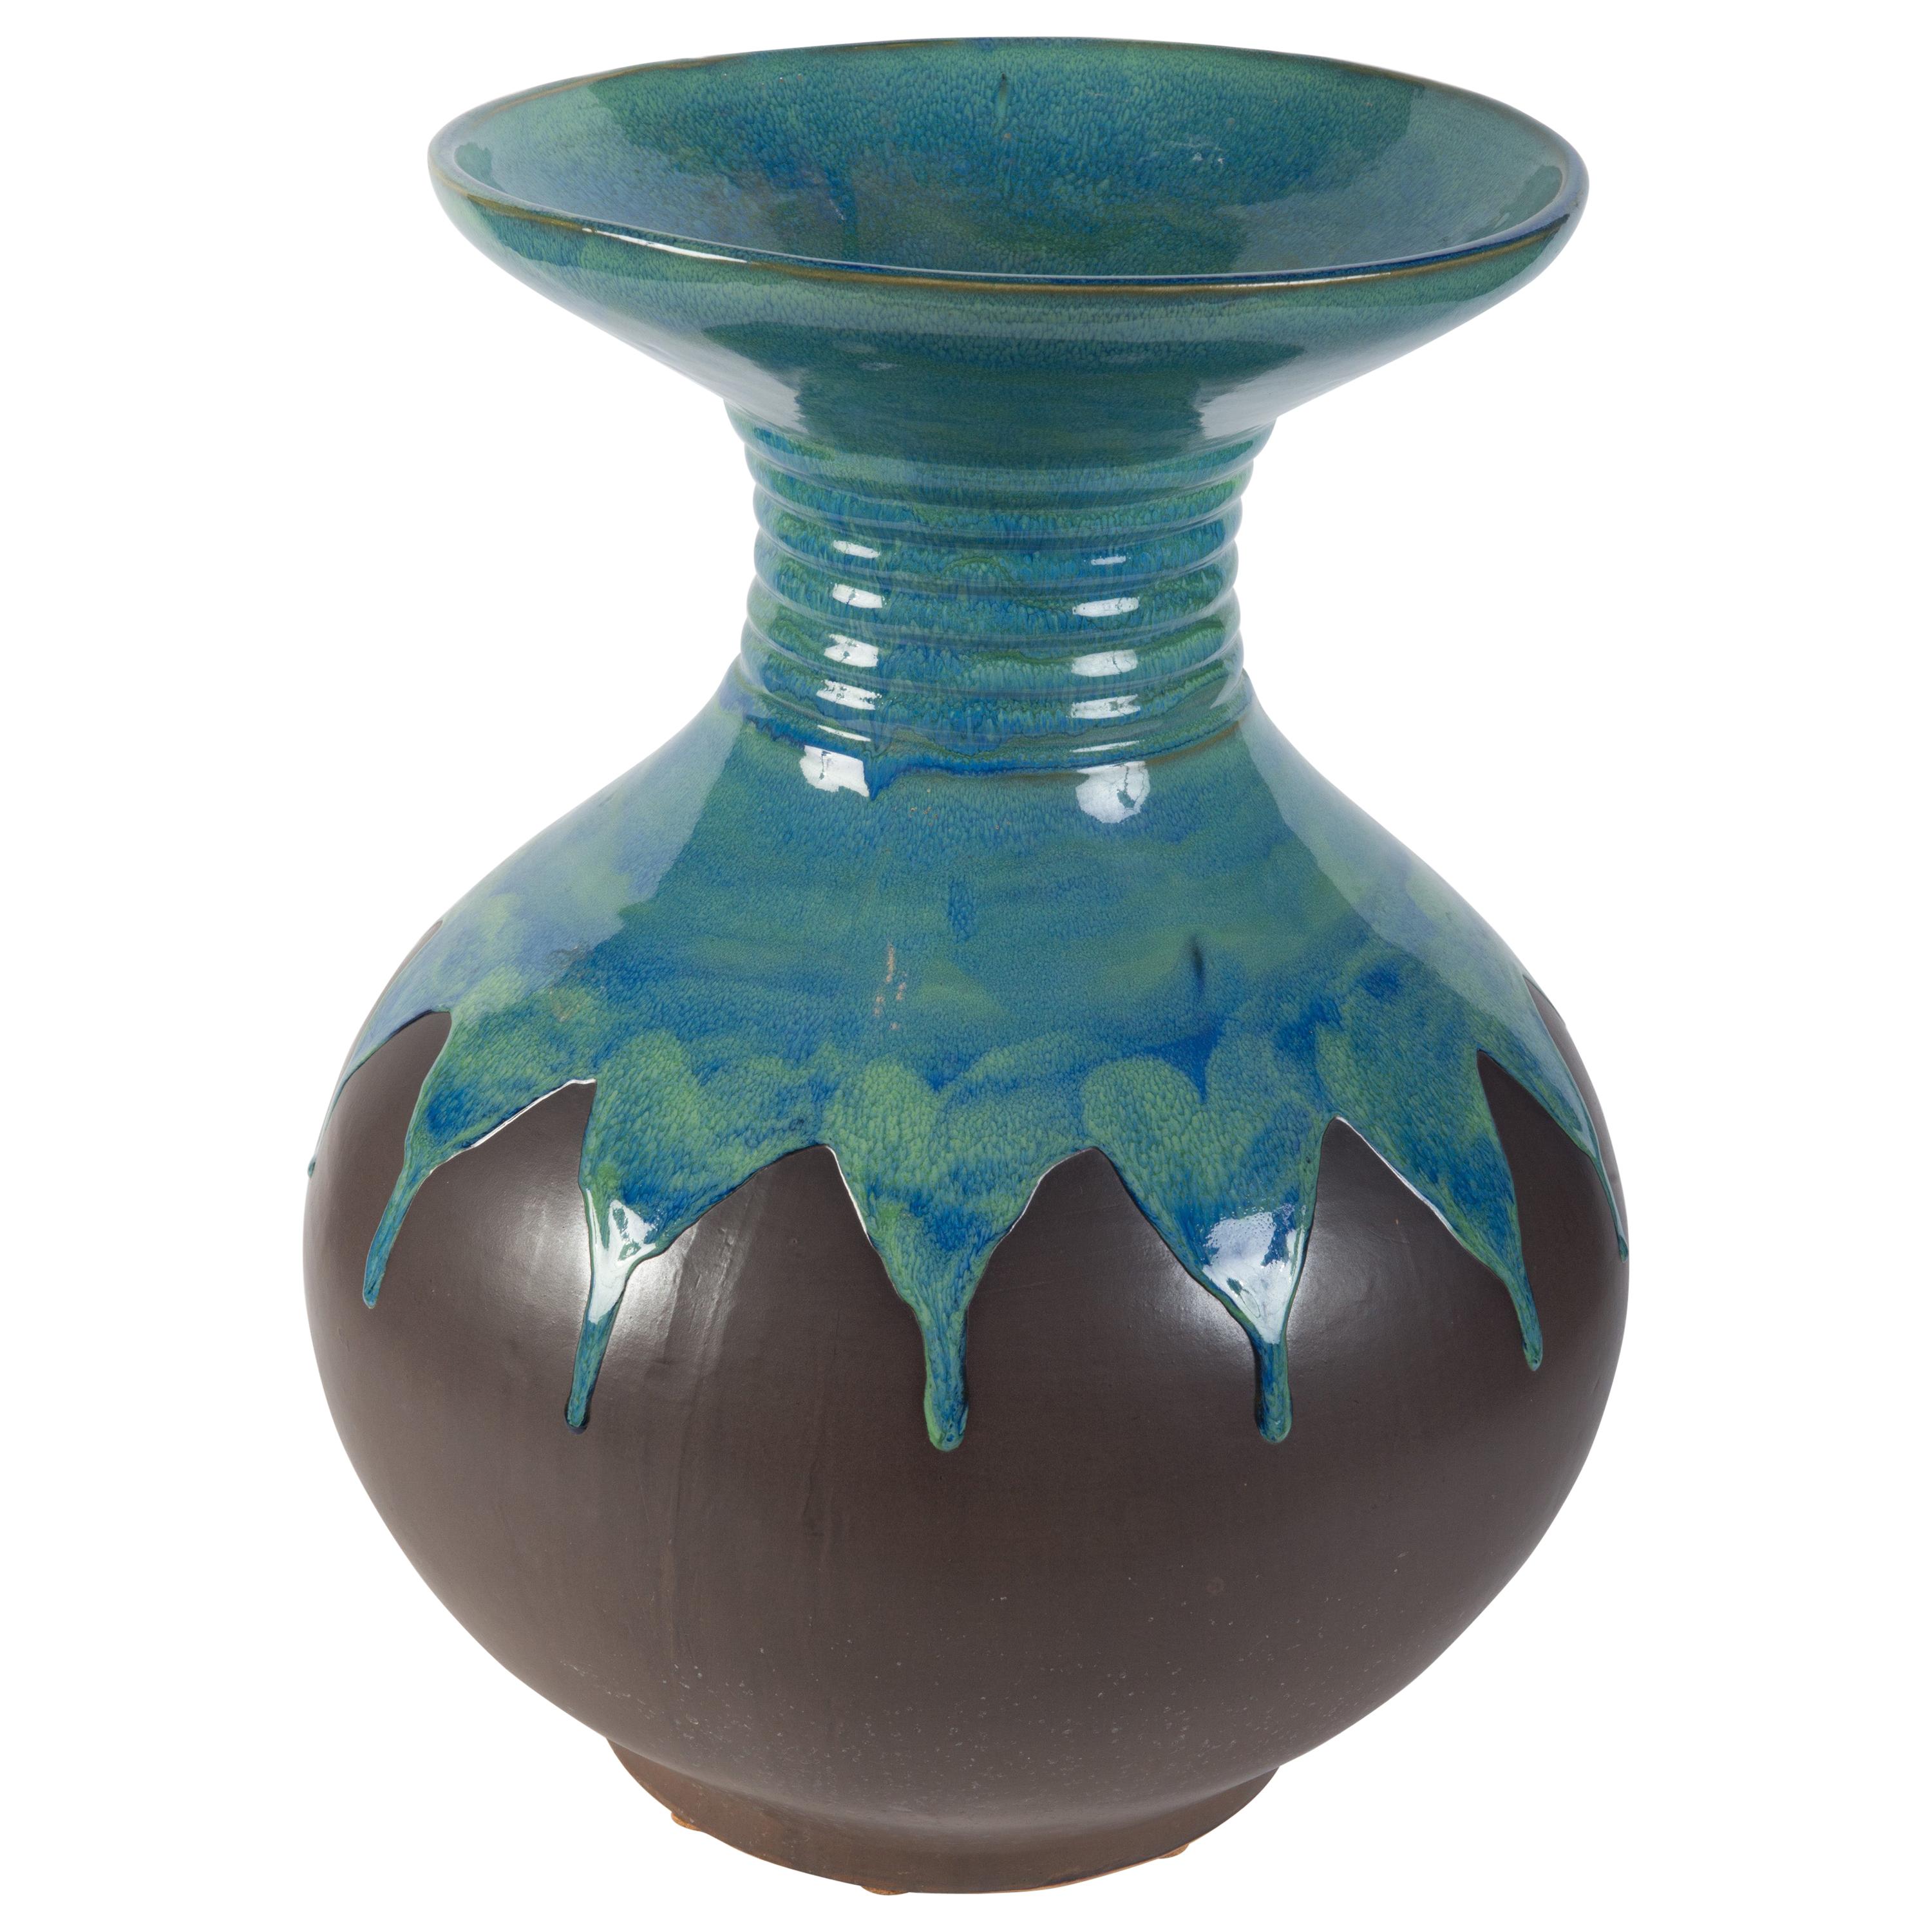 Grand vase moderniste en poterie d'aqua